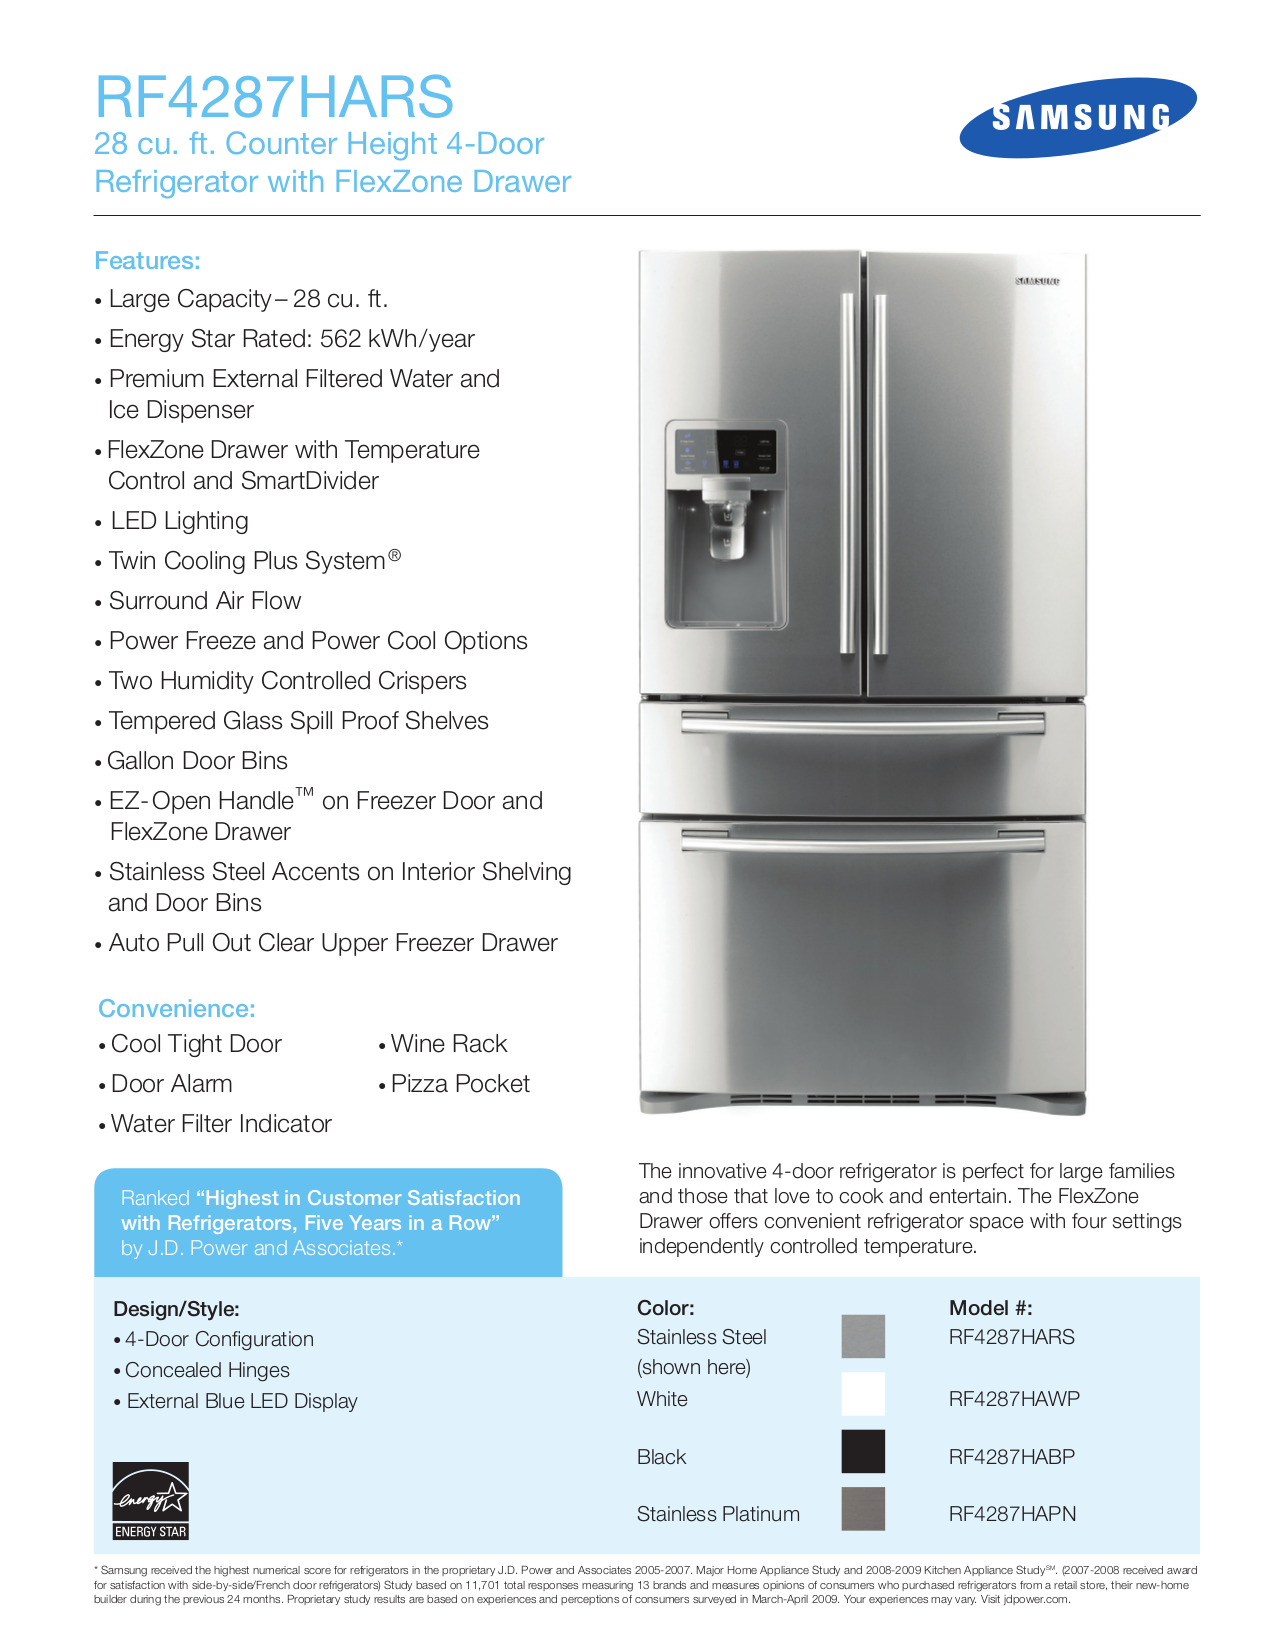 Download free pdf for Samsung RF4287HA Refrigerator manual